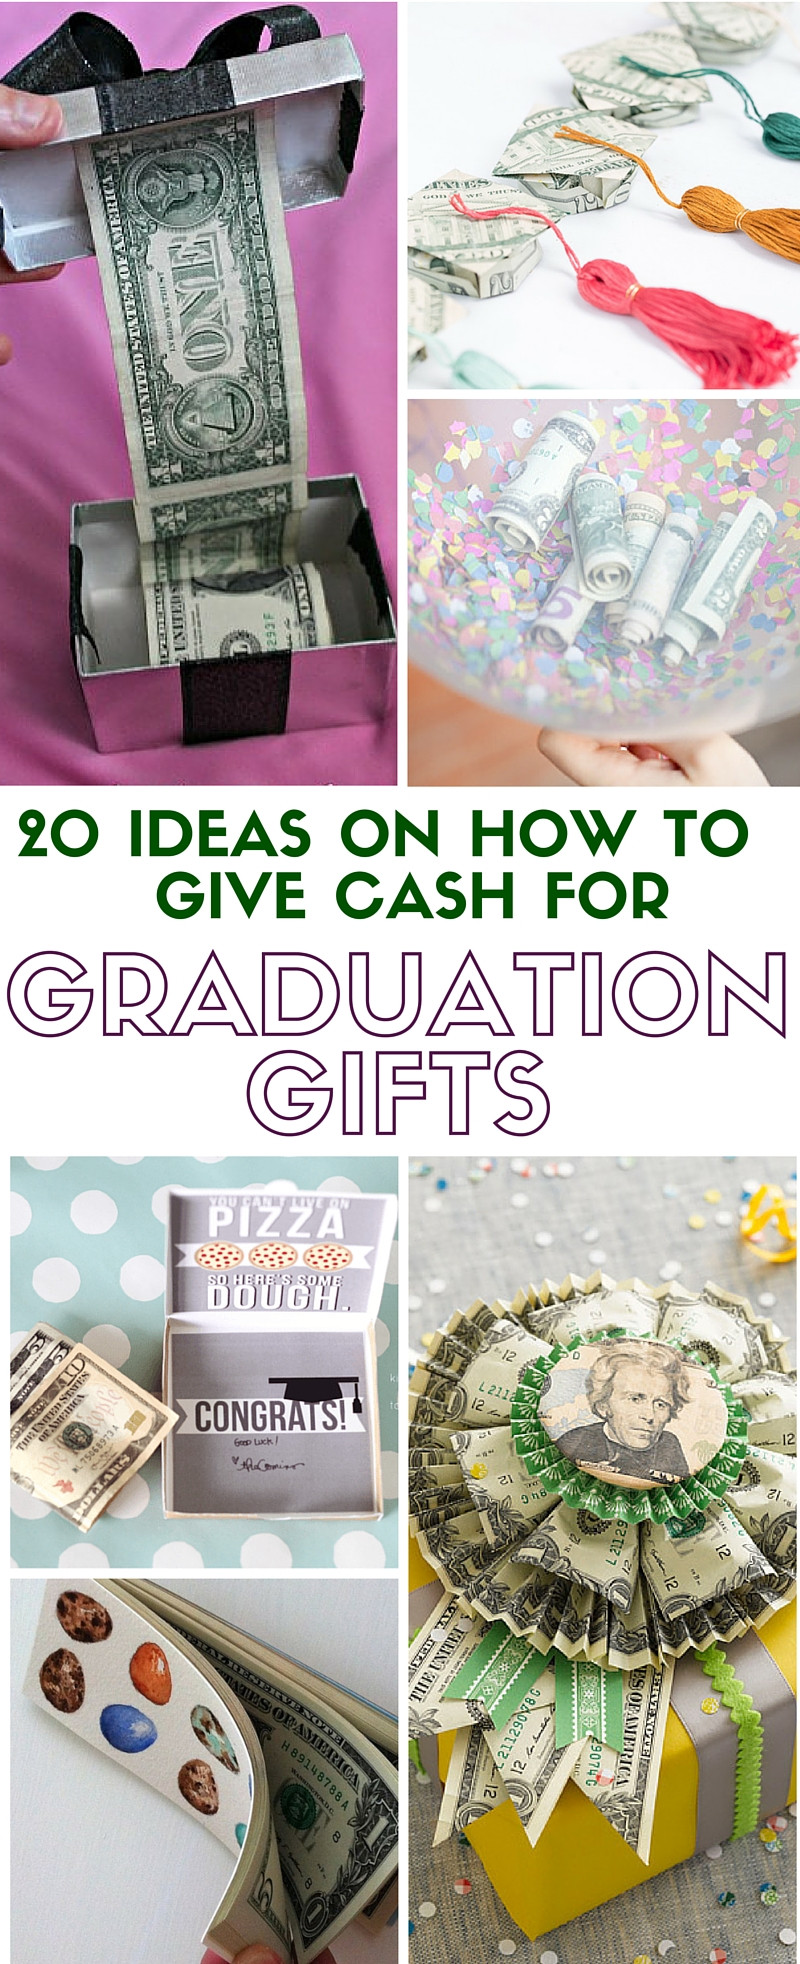 Money Gift Ideas For Graduation
 31 Back To School Teacher Gift Ideas The Crafty Blog Stalker